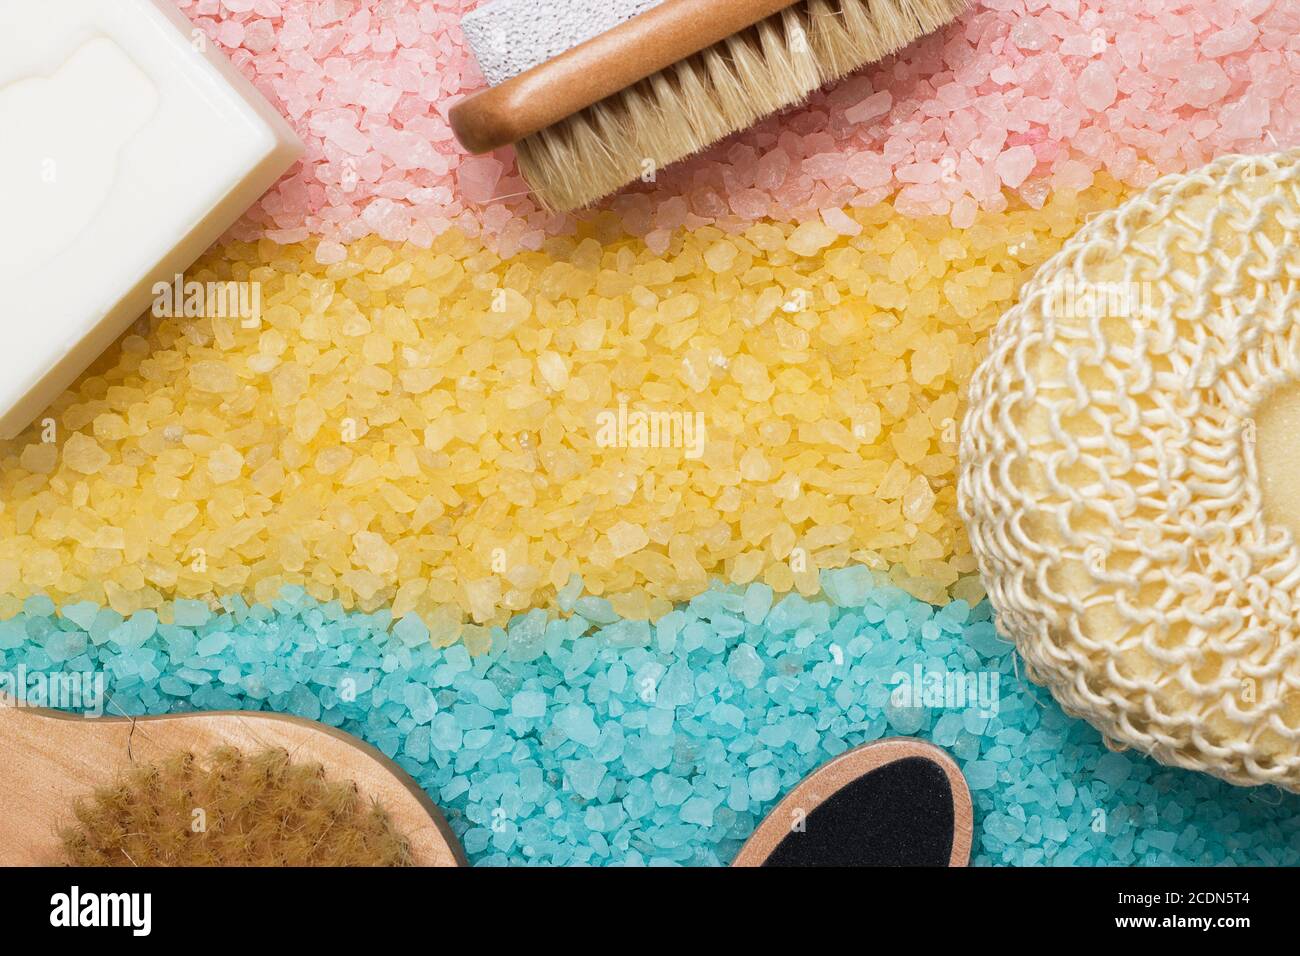 pink blue yellow bath salt and bath accessories Stock Photo